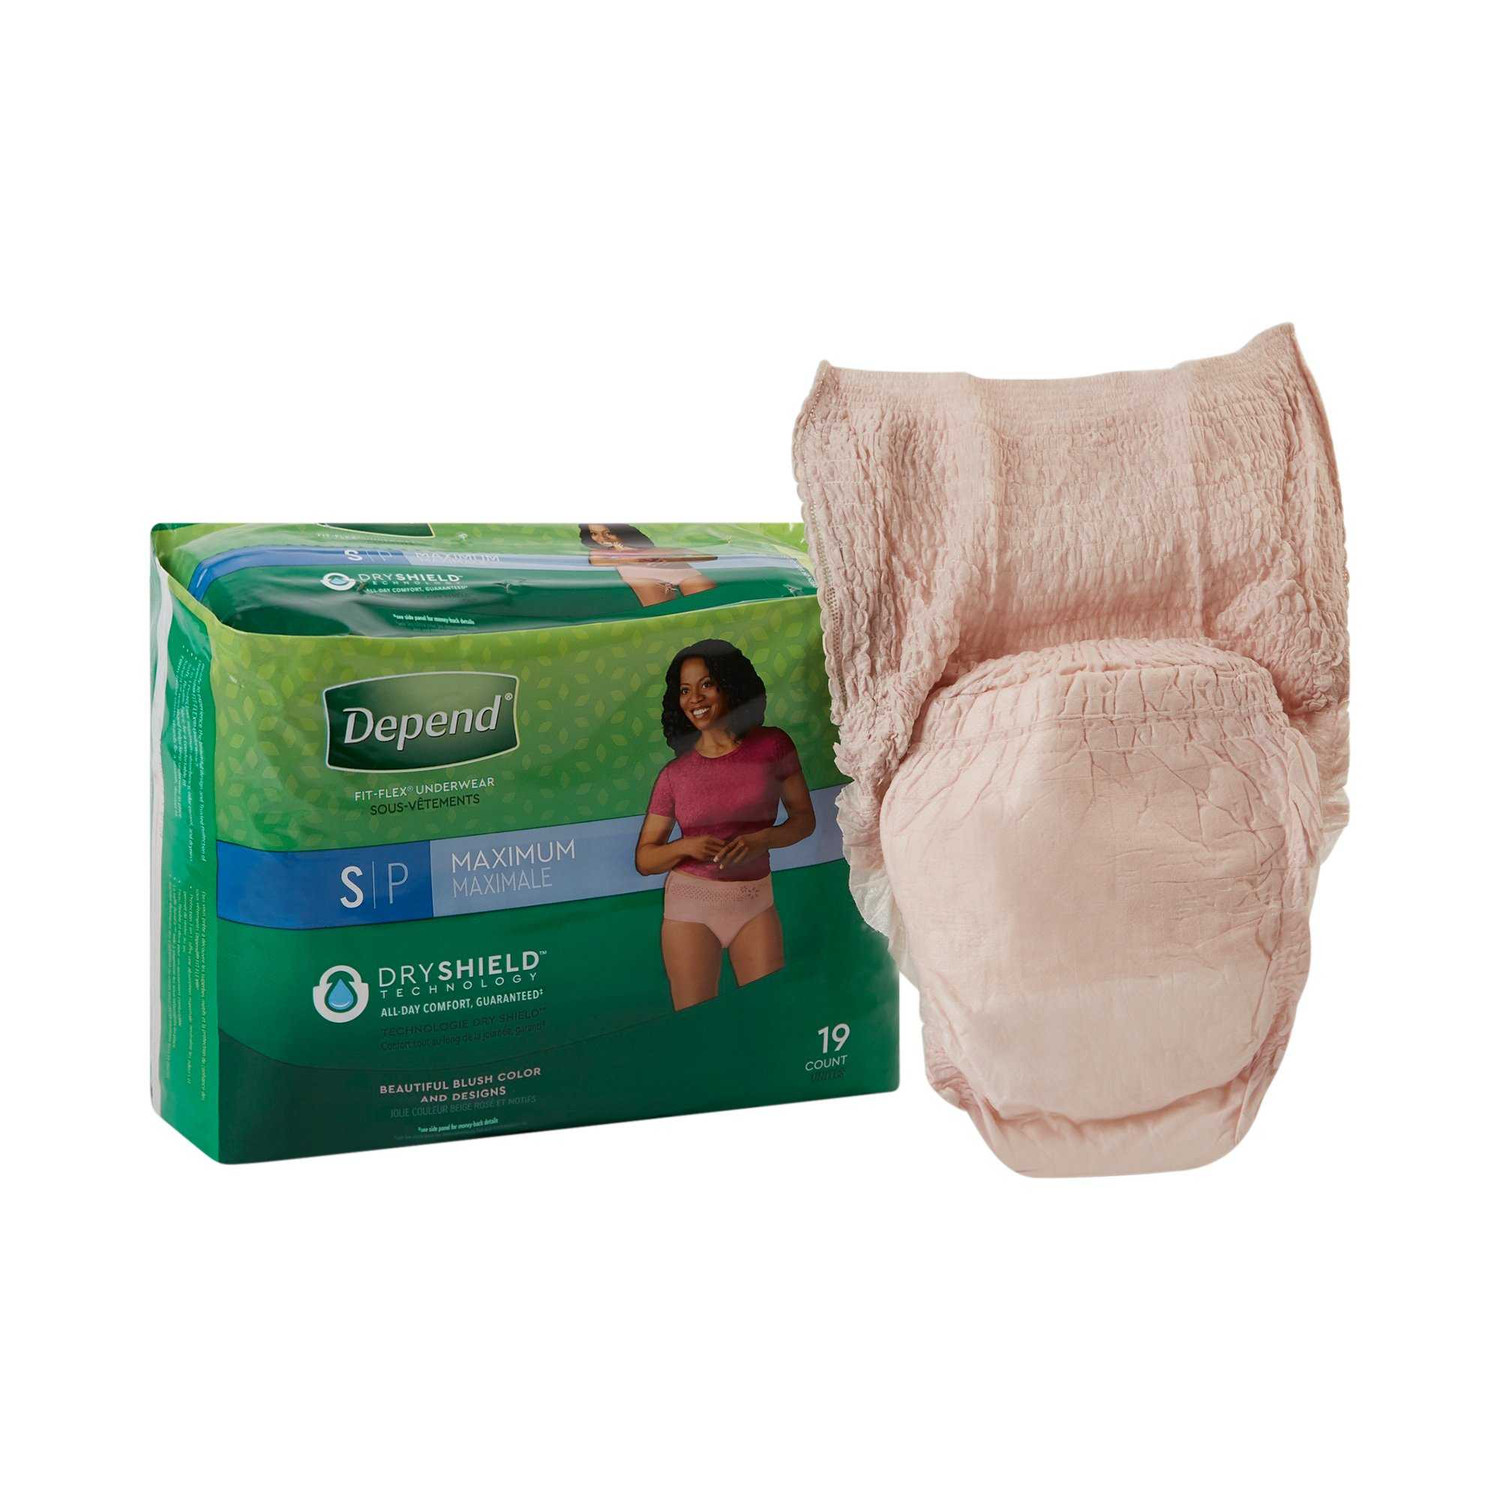 Depend L Maximum Fit-Flex Dry Shield Underwear (28 ct), Delivery Near You